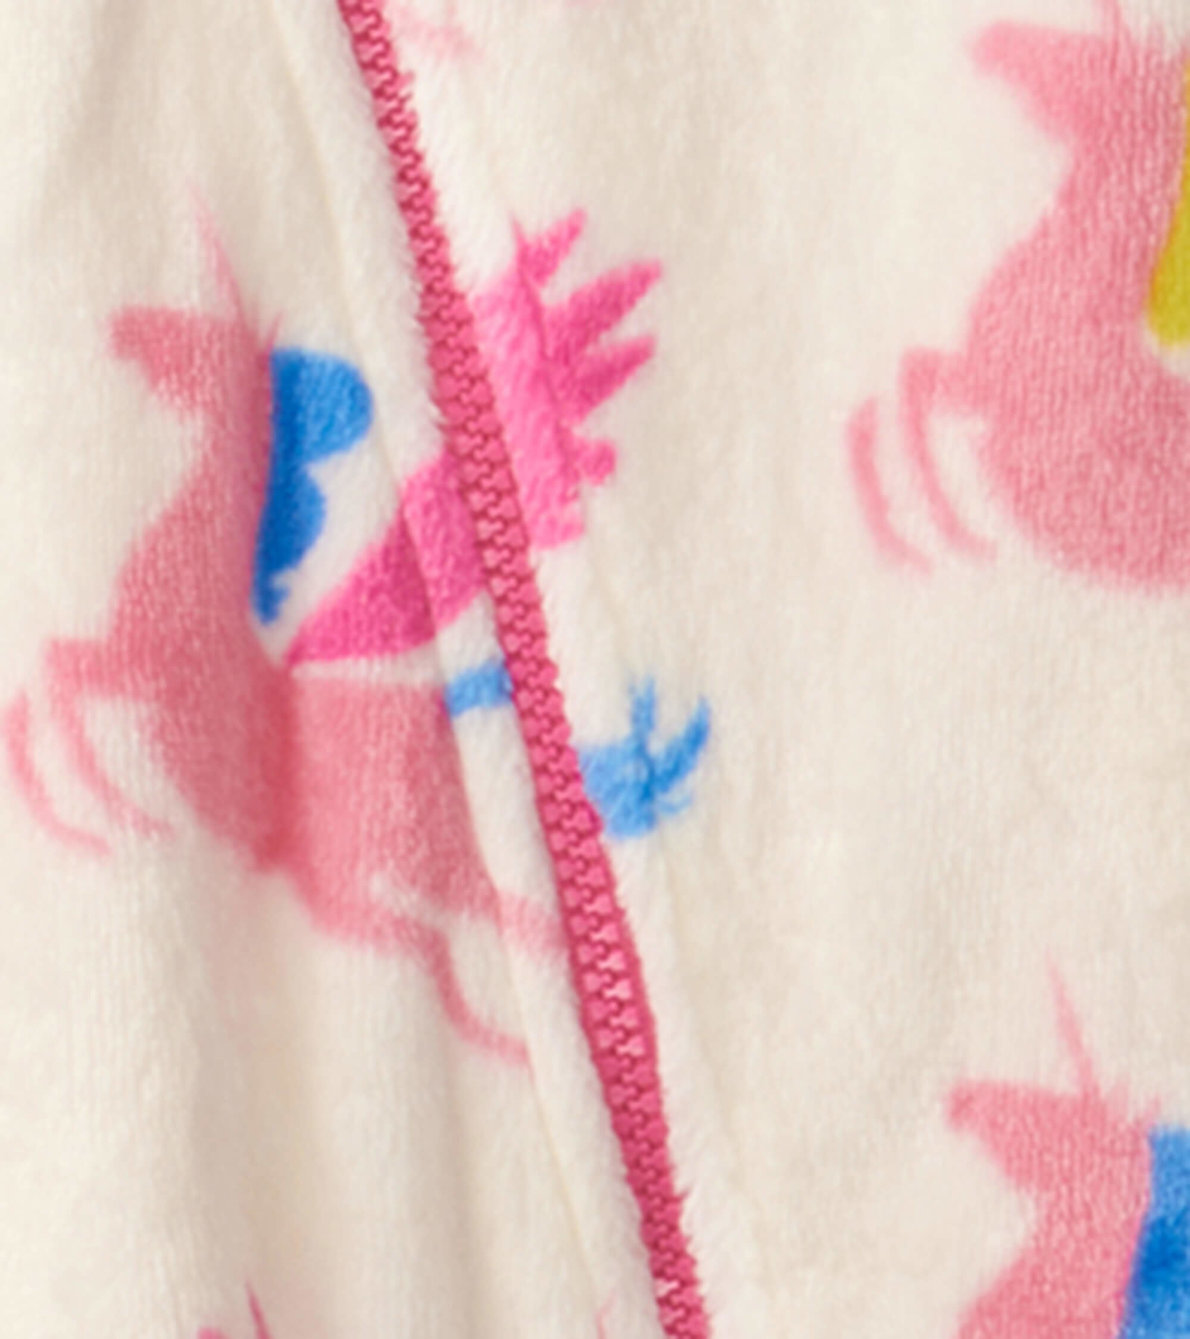 View larger image of Unicorns Baby Fleece Suit